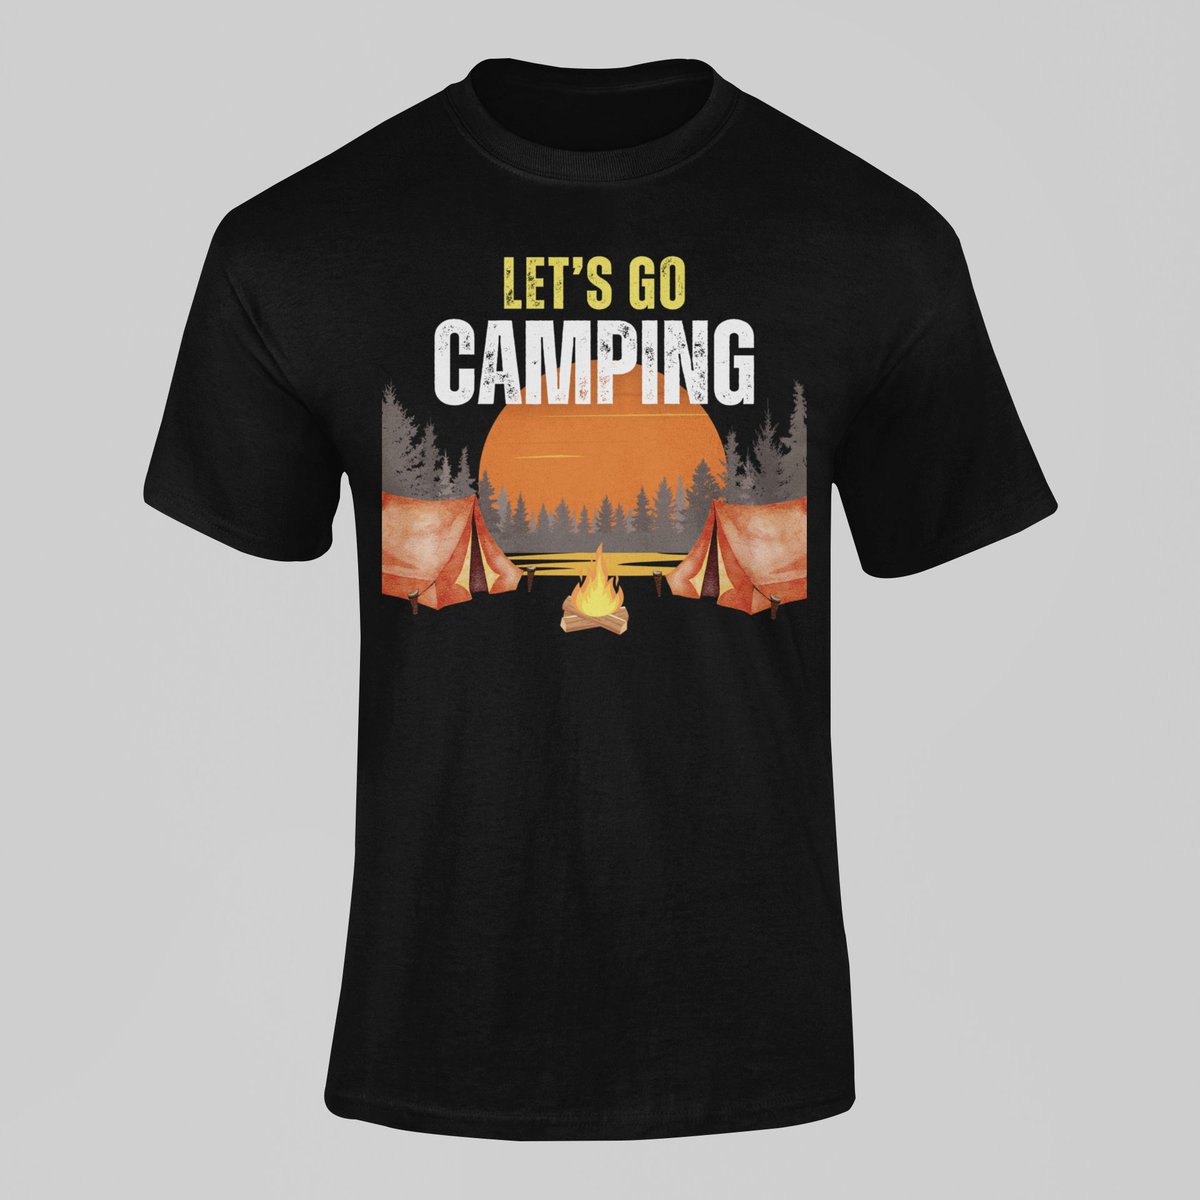 Order Here👉teepublic.com/t-shirt/553432…

#CampingAdventure #camping #campinglife #outdoors #wilderness #forest #tents #campingtent #intothewild #naturelovers #explore #Explorer #nature #campfire